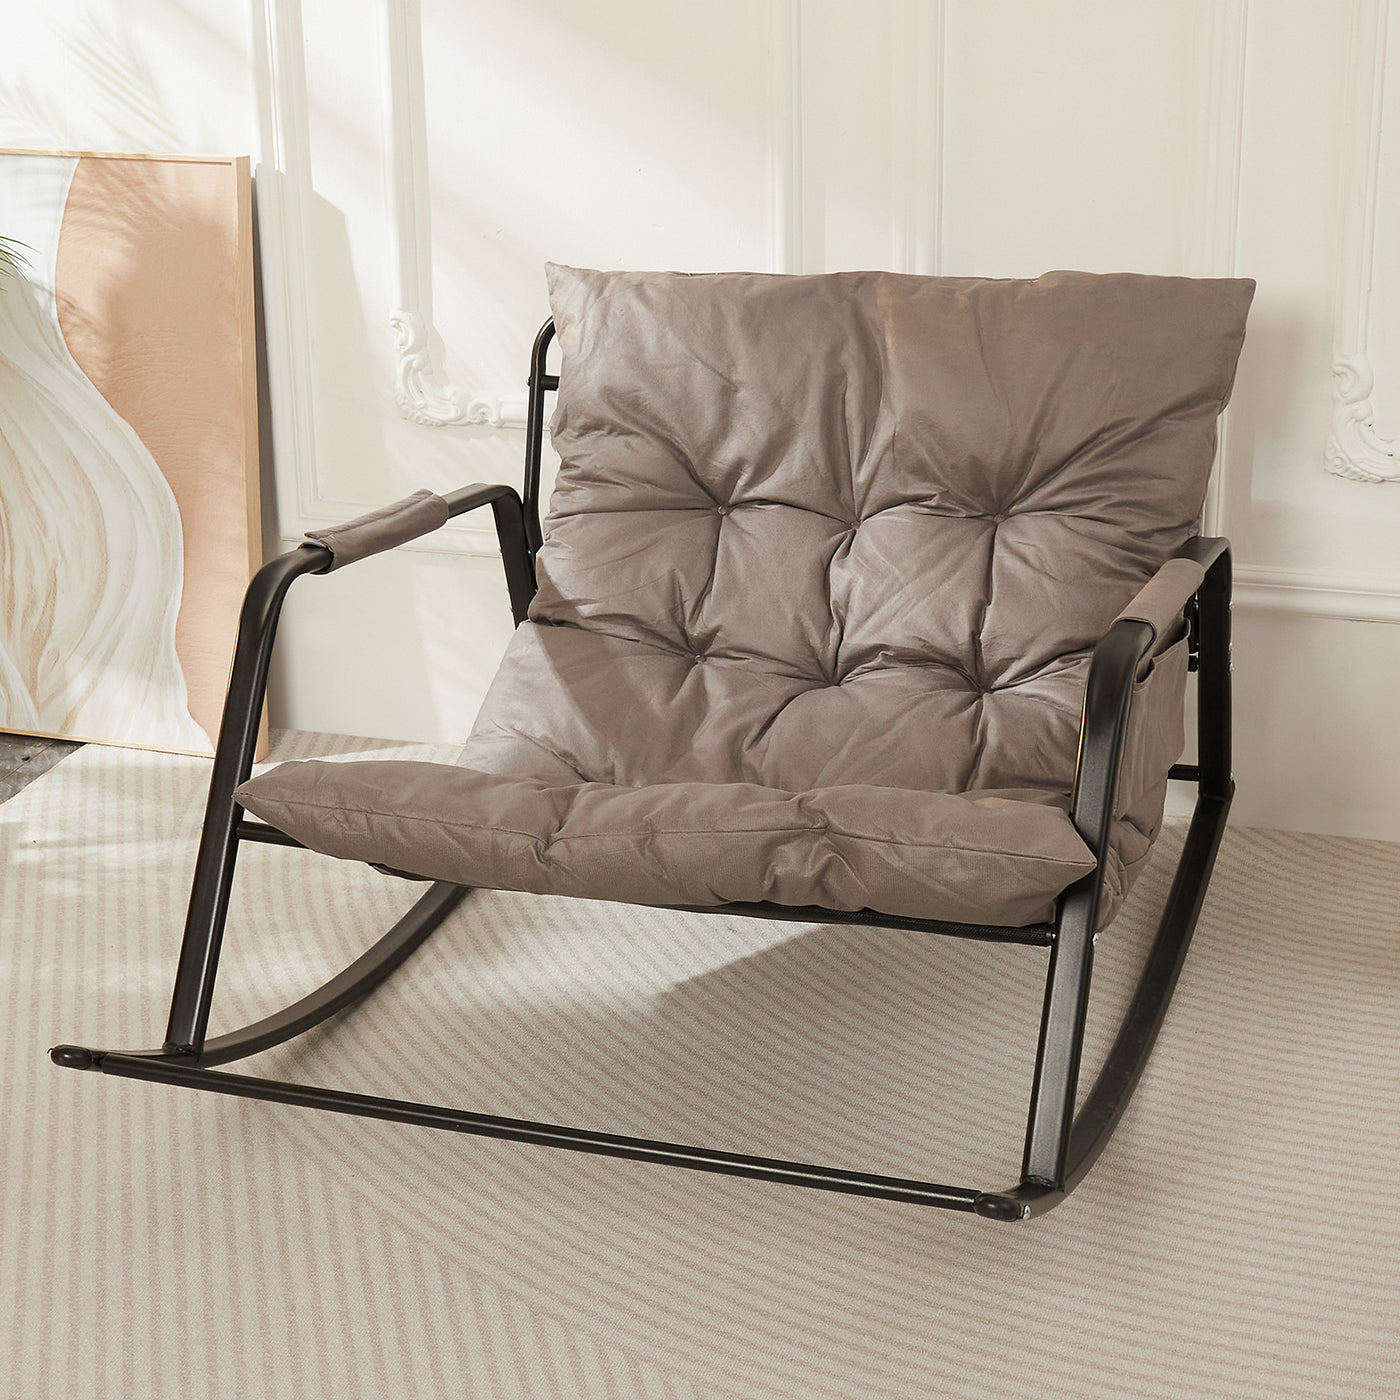 MAXYOYO Metal Rocking Chair, Reading Sofa Modern Lounge Rocker with Cushion for Living Room and Graden, Dark Grey